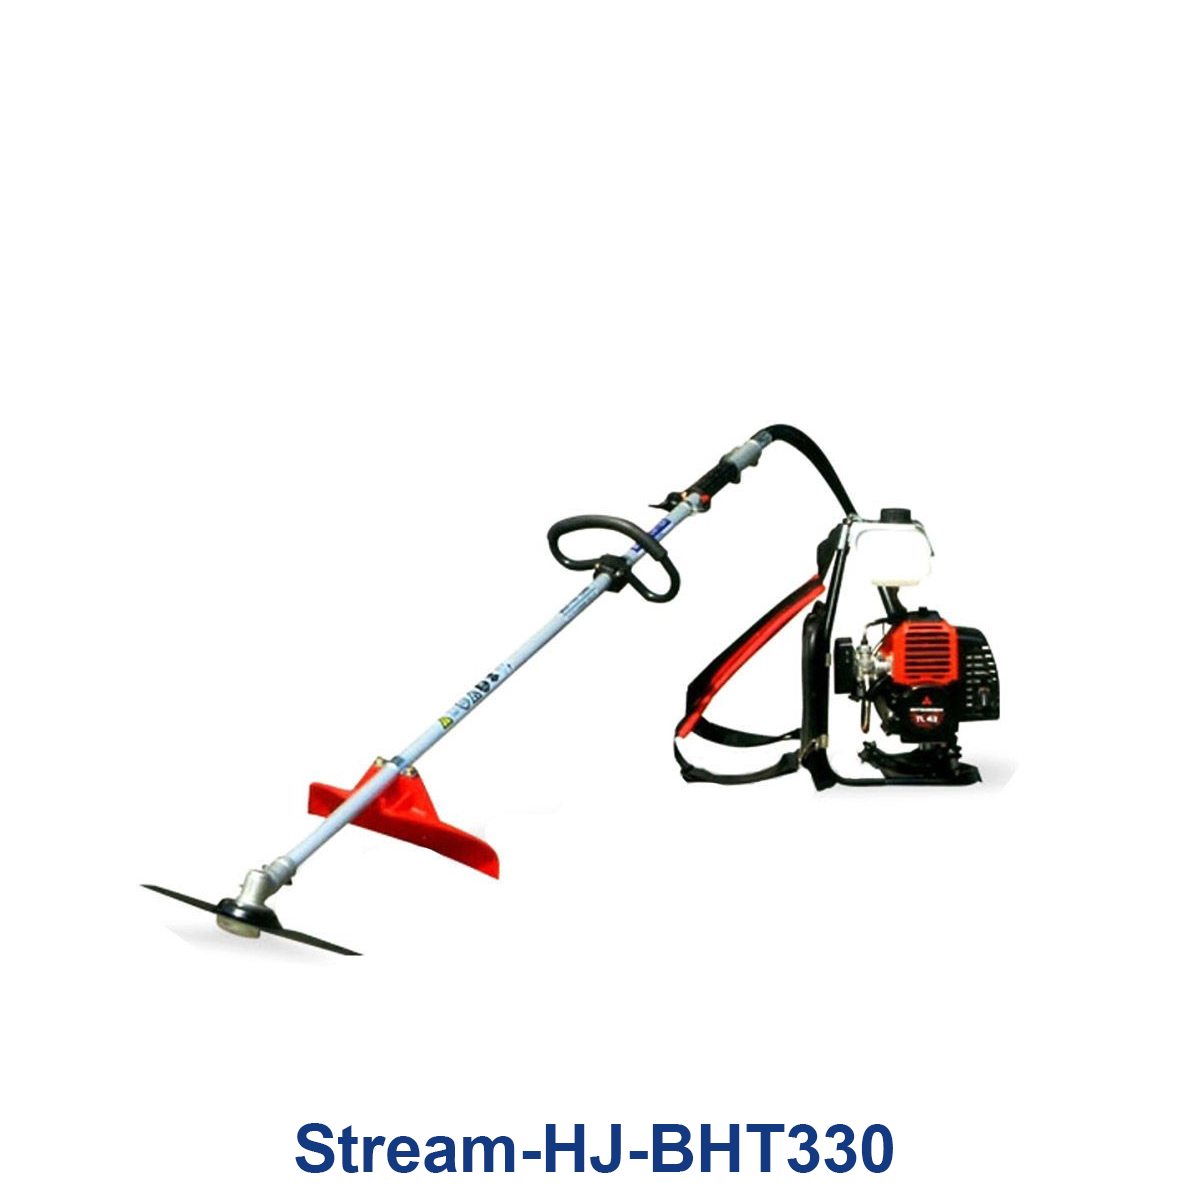 Stream-HJ-BHT330